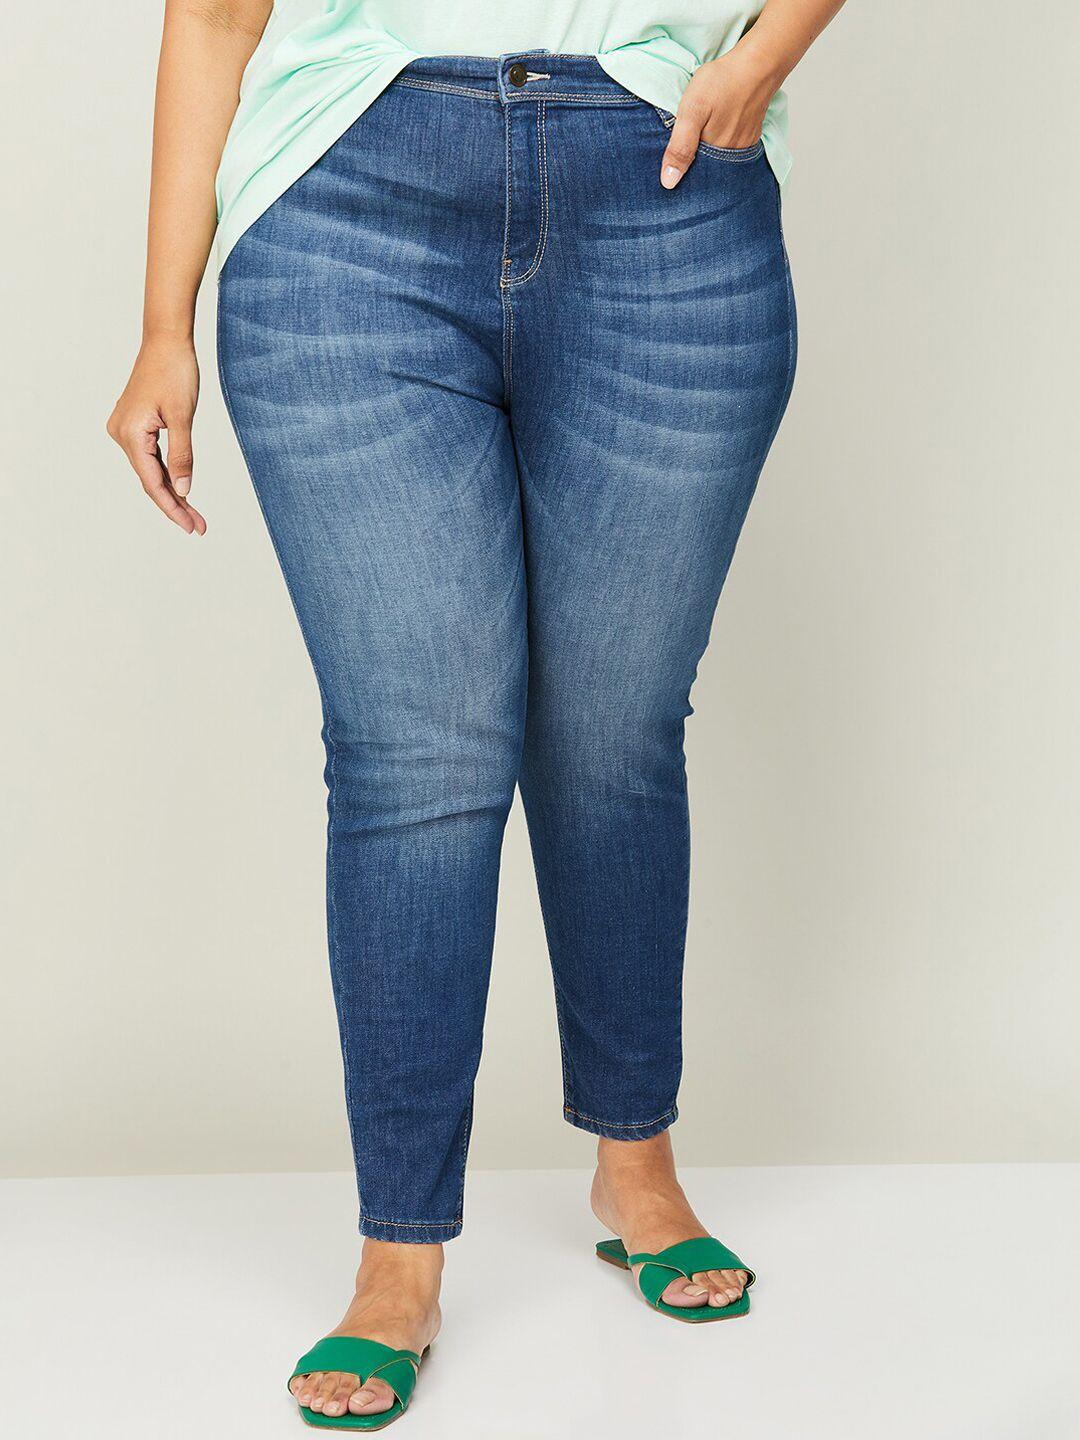 nexus women plus size light fade heavy fade cotton jeans